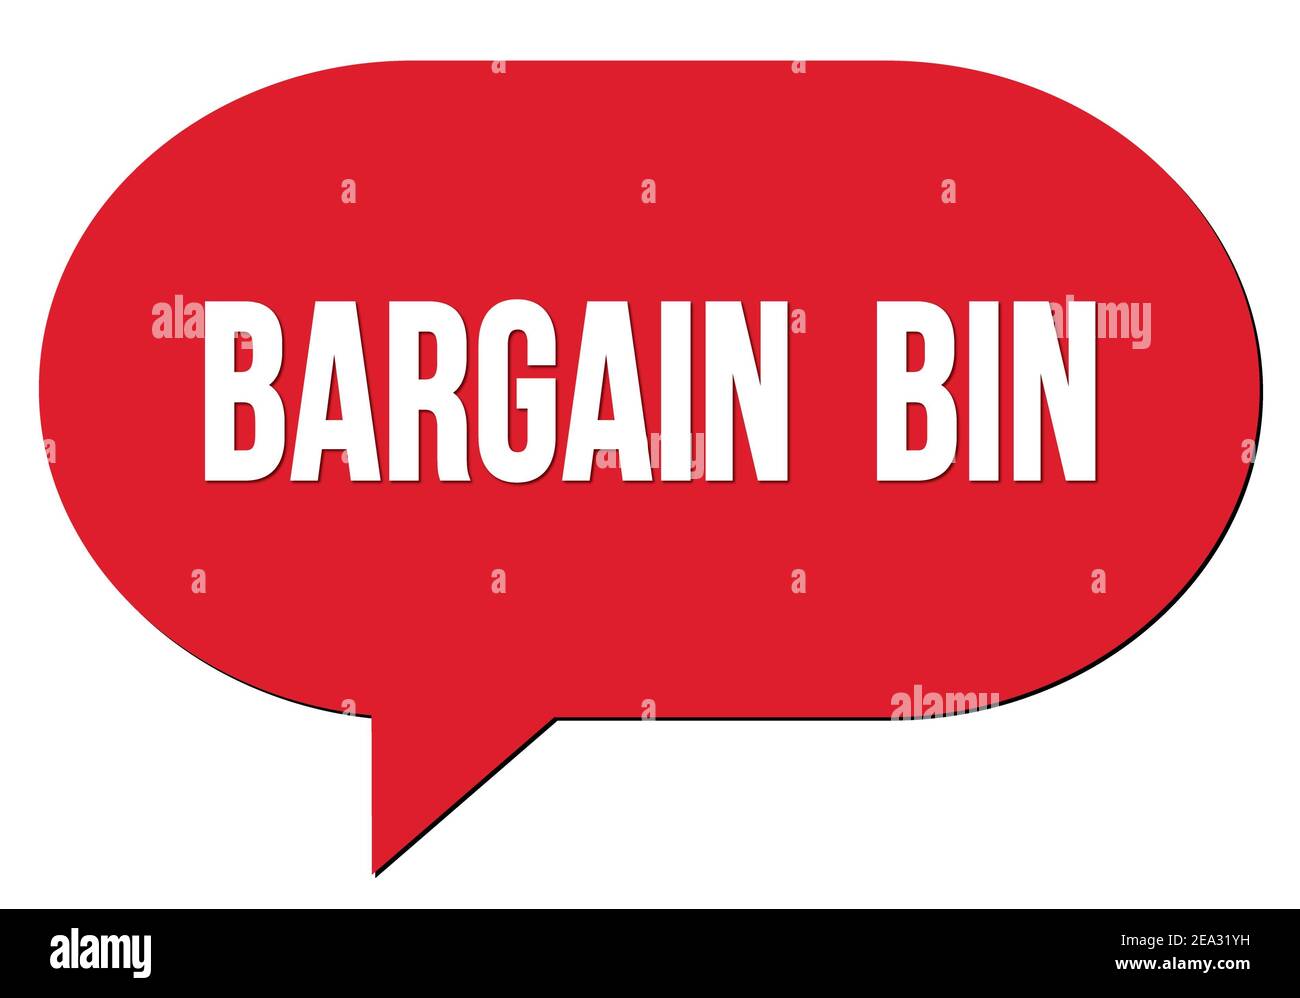 BARGAIN  BIN text written in a red speech bubble stamp Stock Photo